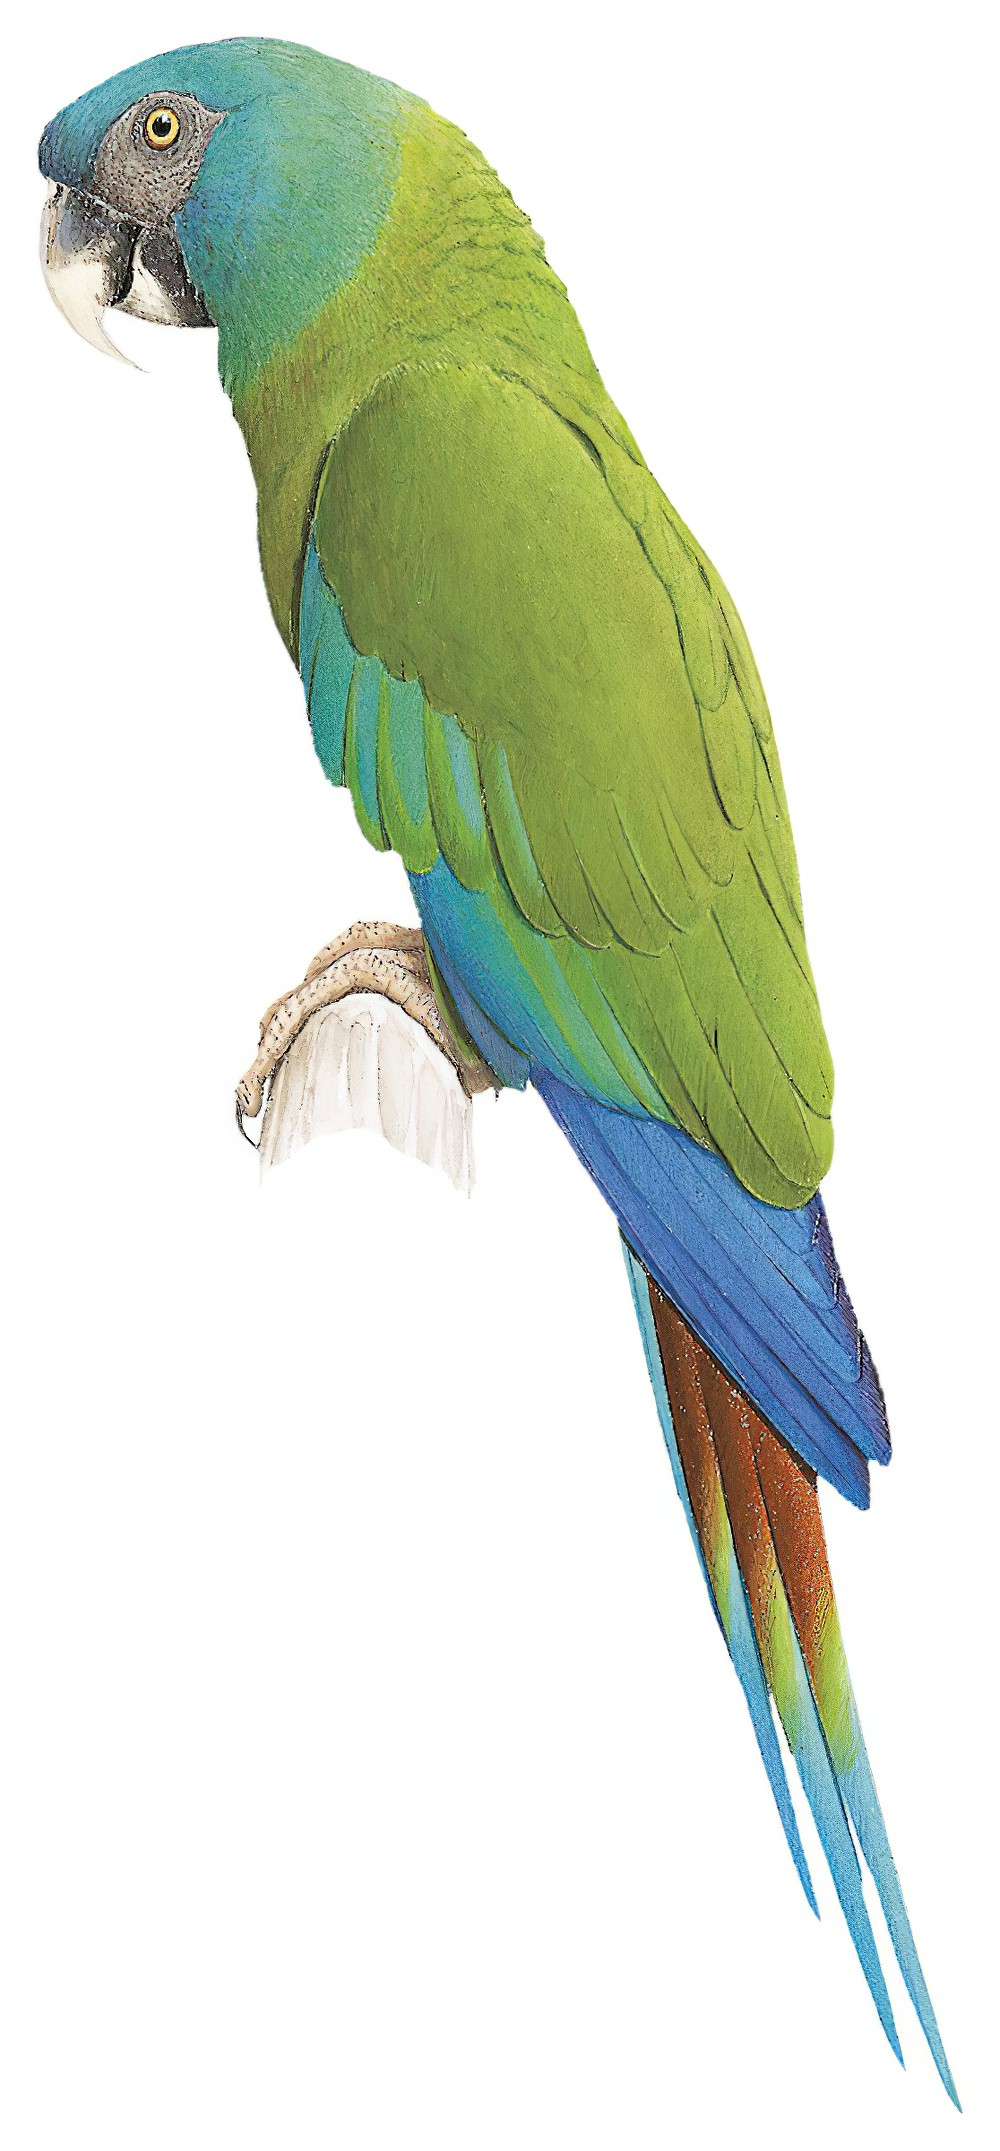 Blue-headed Macaw / Primolius couloni